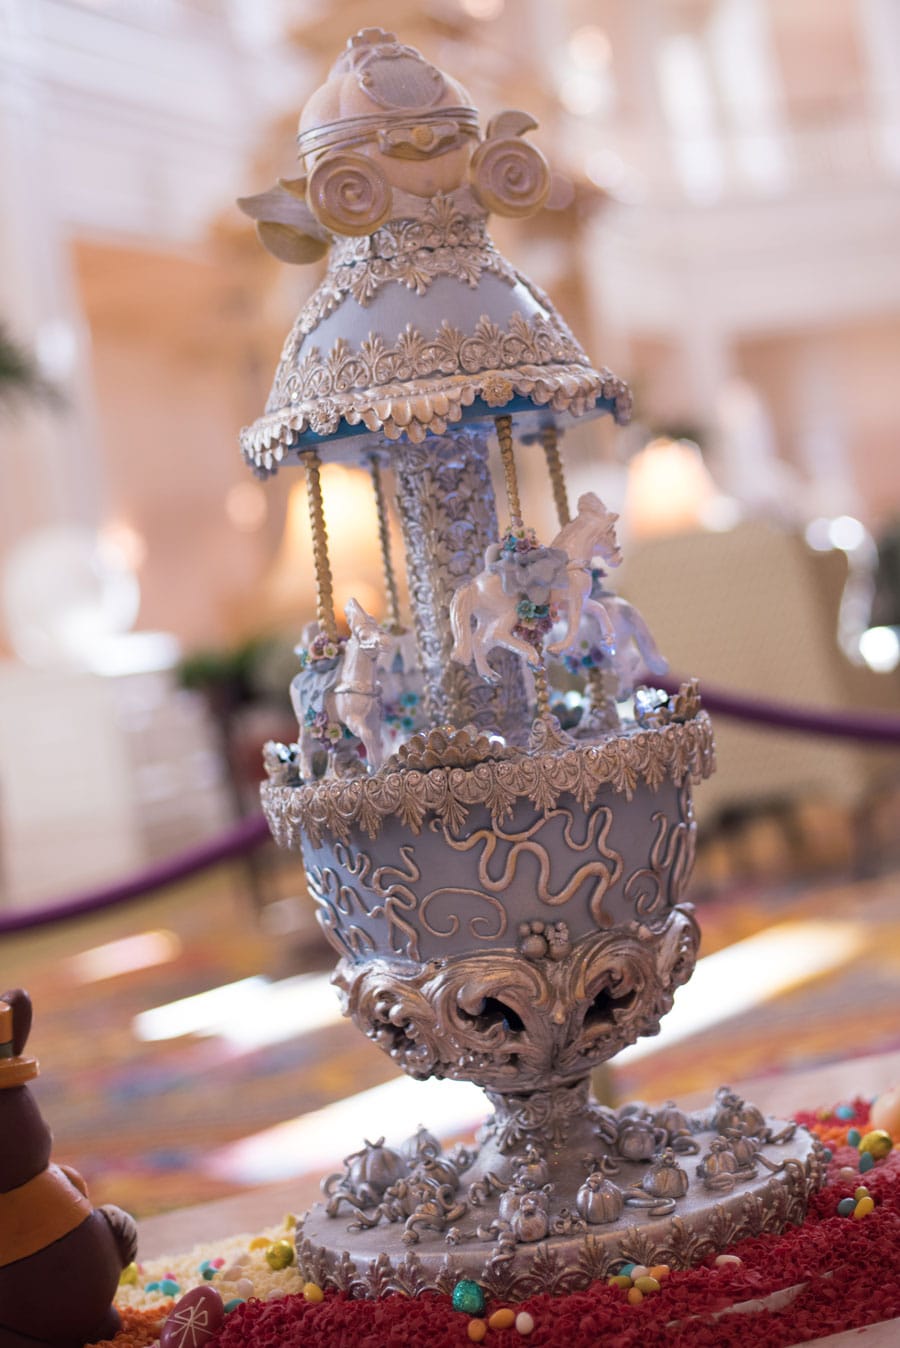 Cinderella Carousel Easter Egg at Disney’s Grand Floridian Resort & Spa